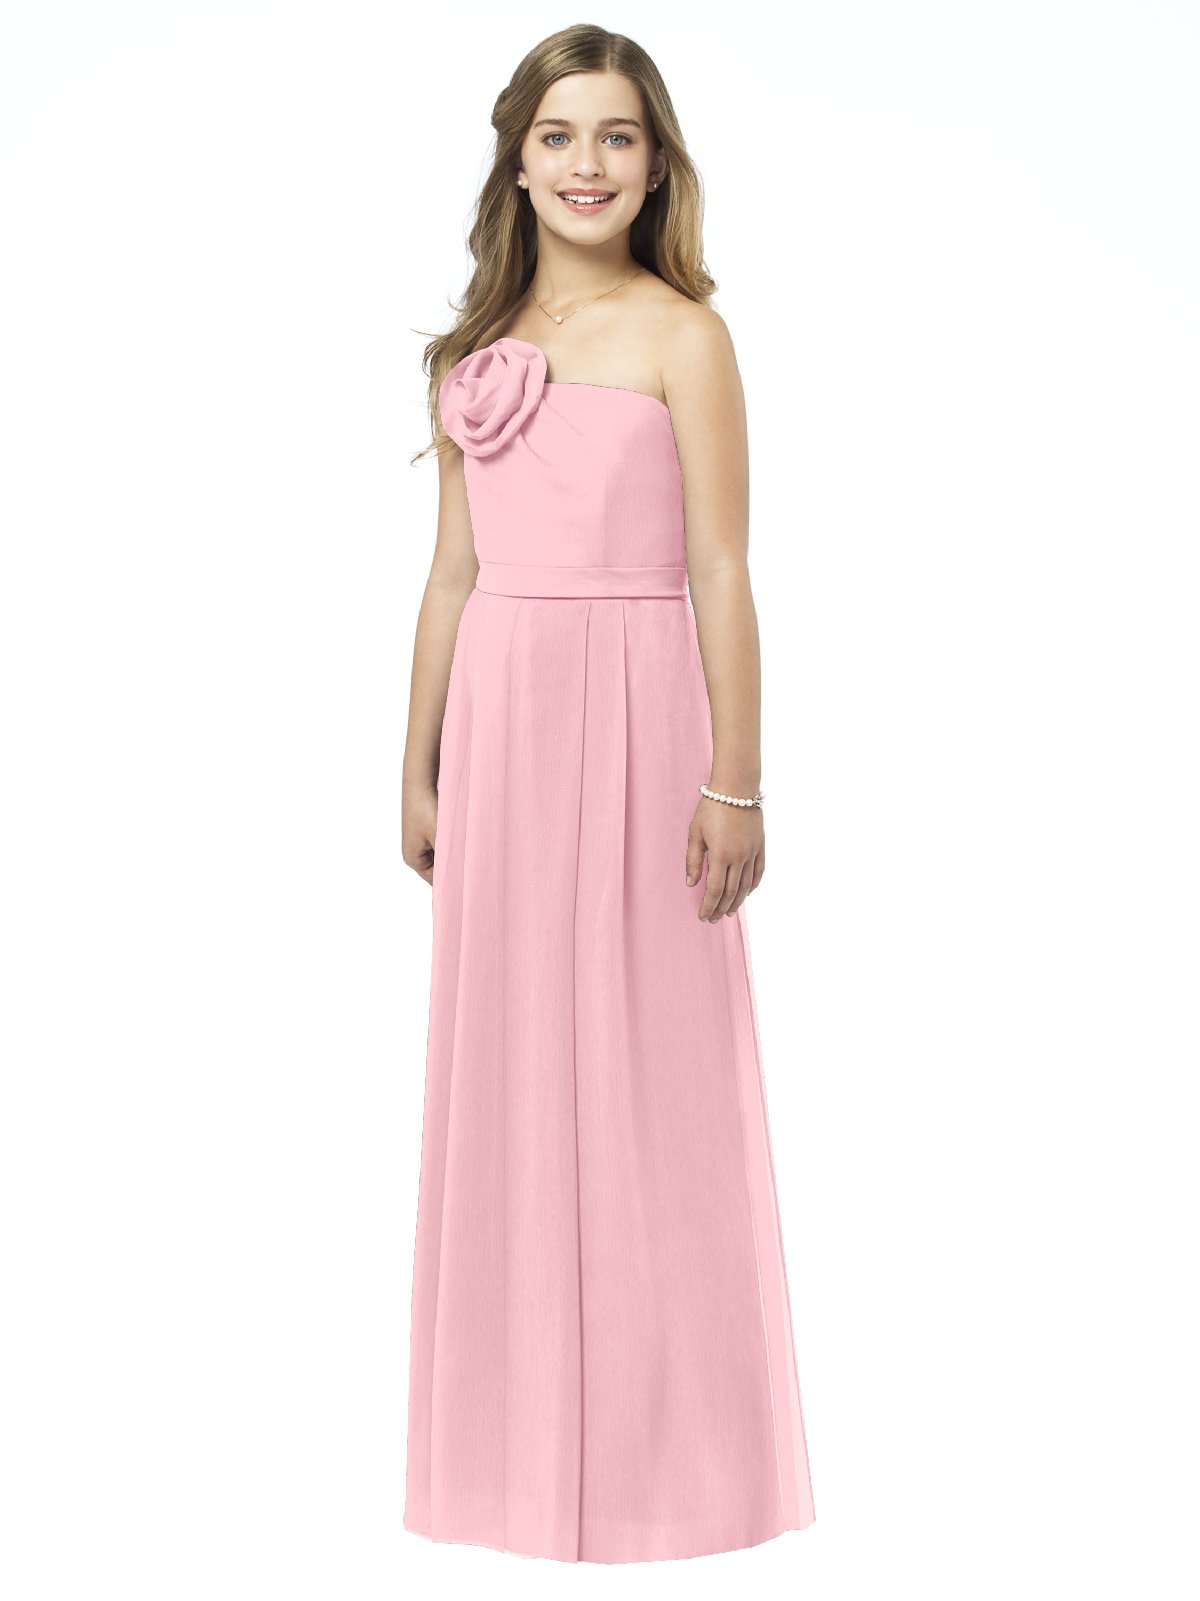 Pink Column Strapless Zipper Floor Length Chiffon Prom Dresses With Flowers 